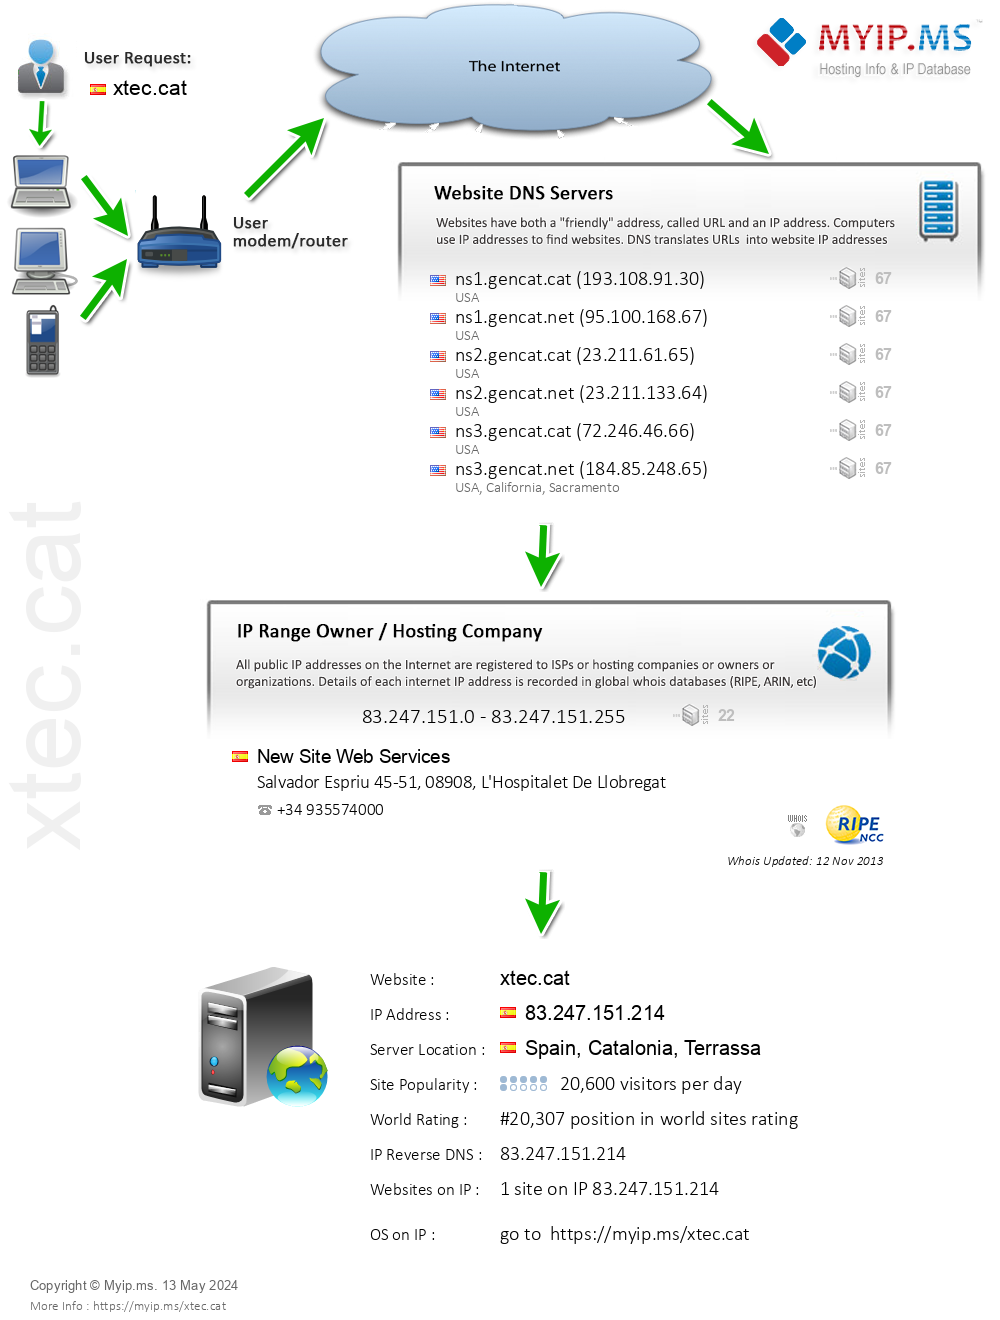 Xtec.cat - Website Hosting Visual IP Diagram